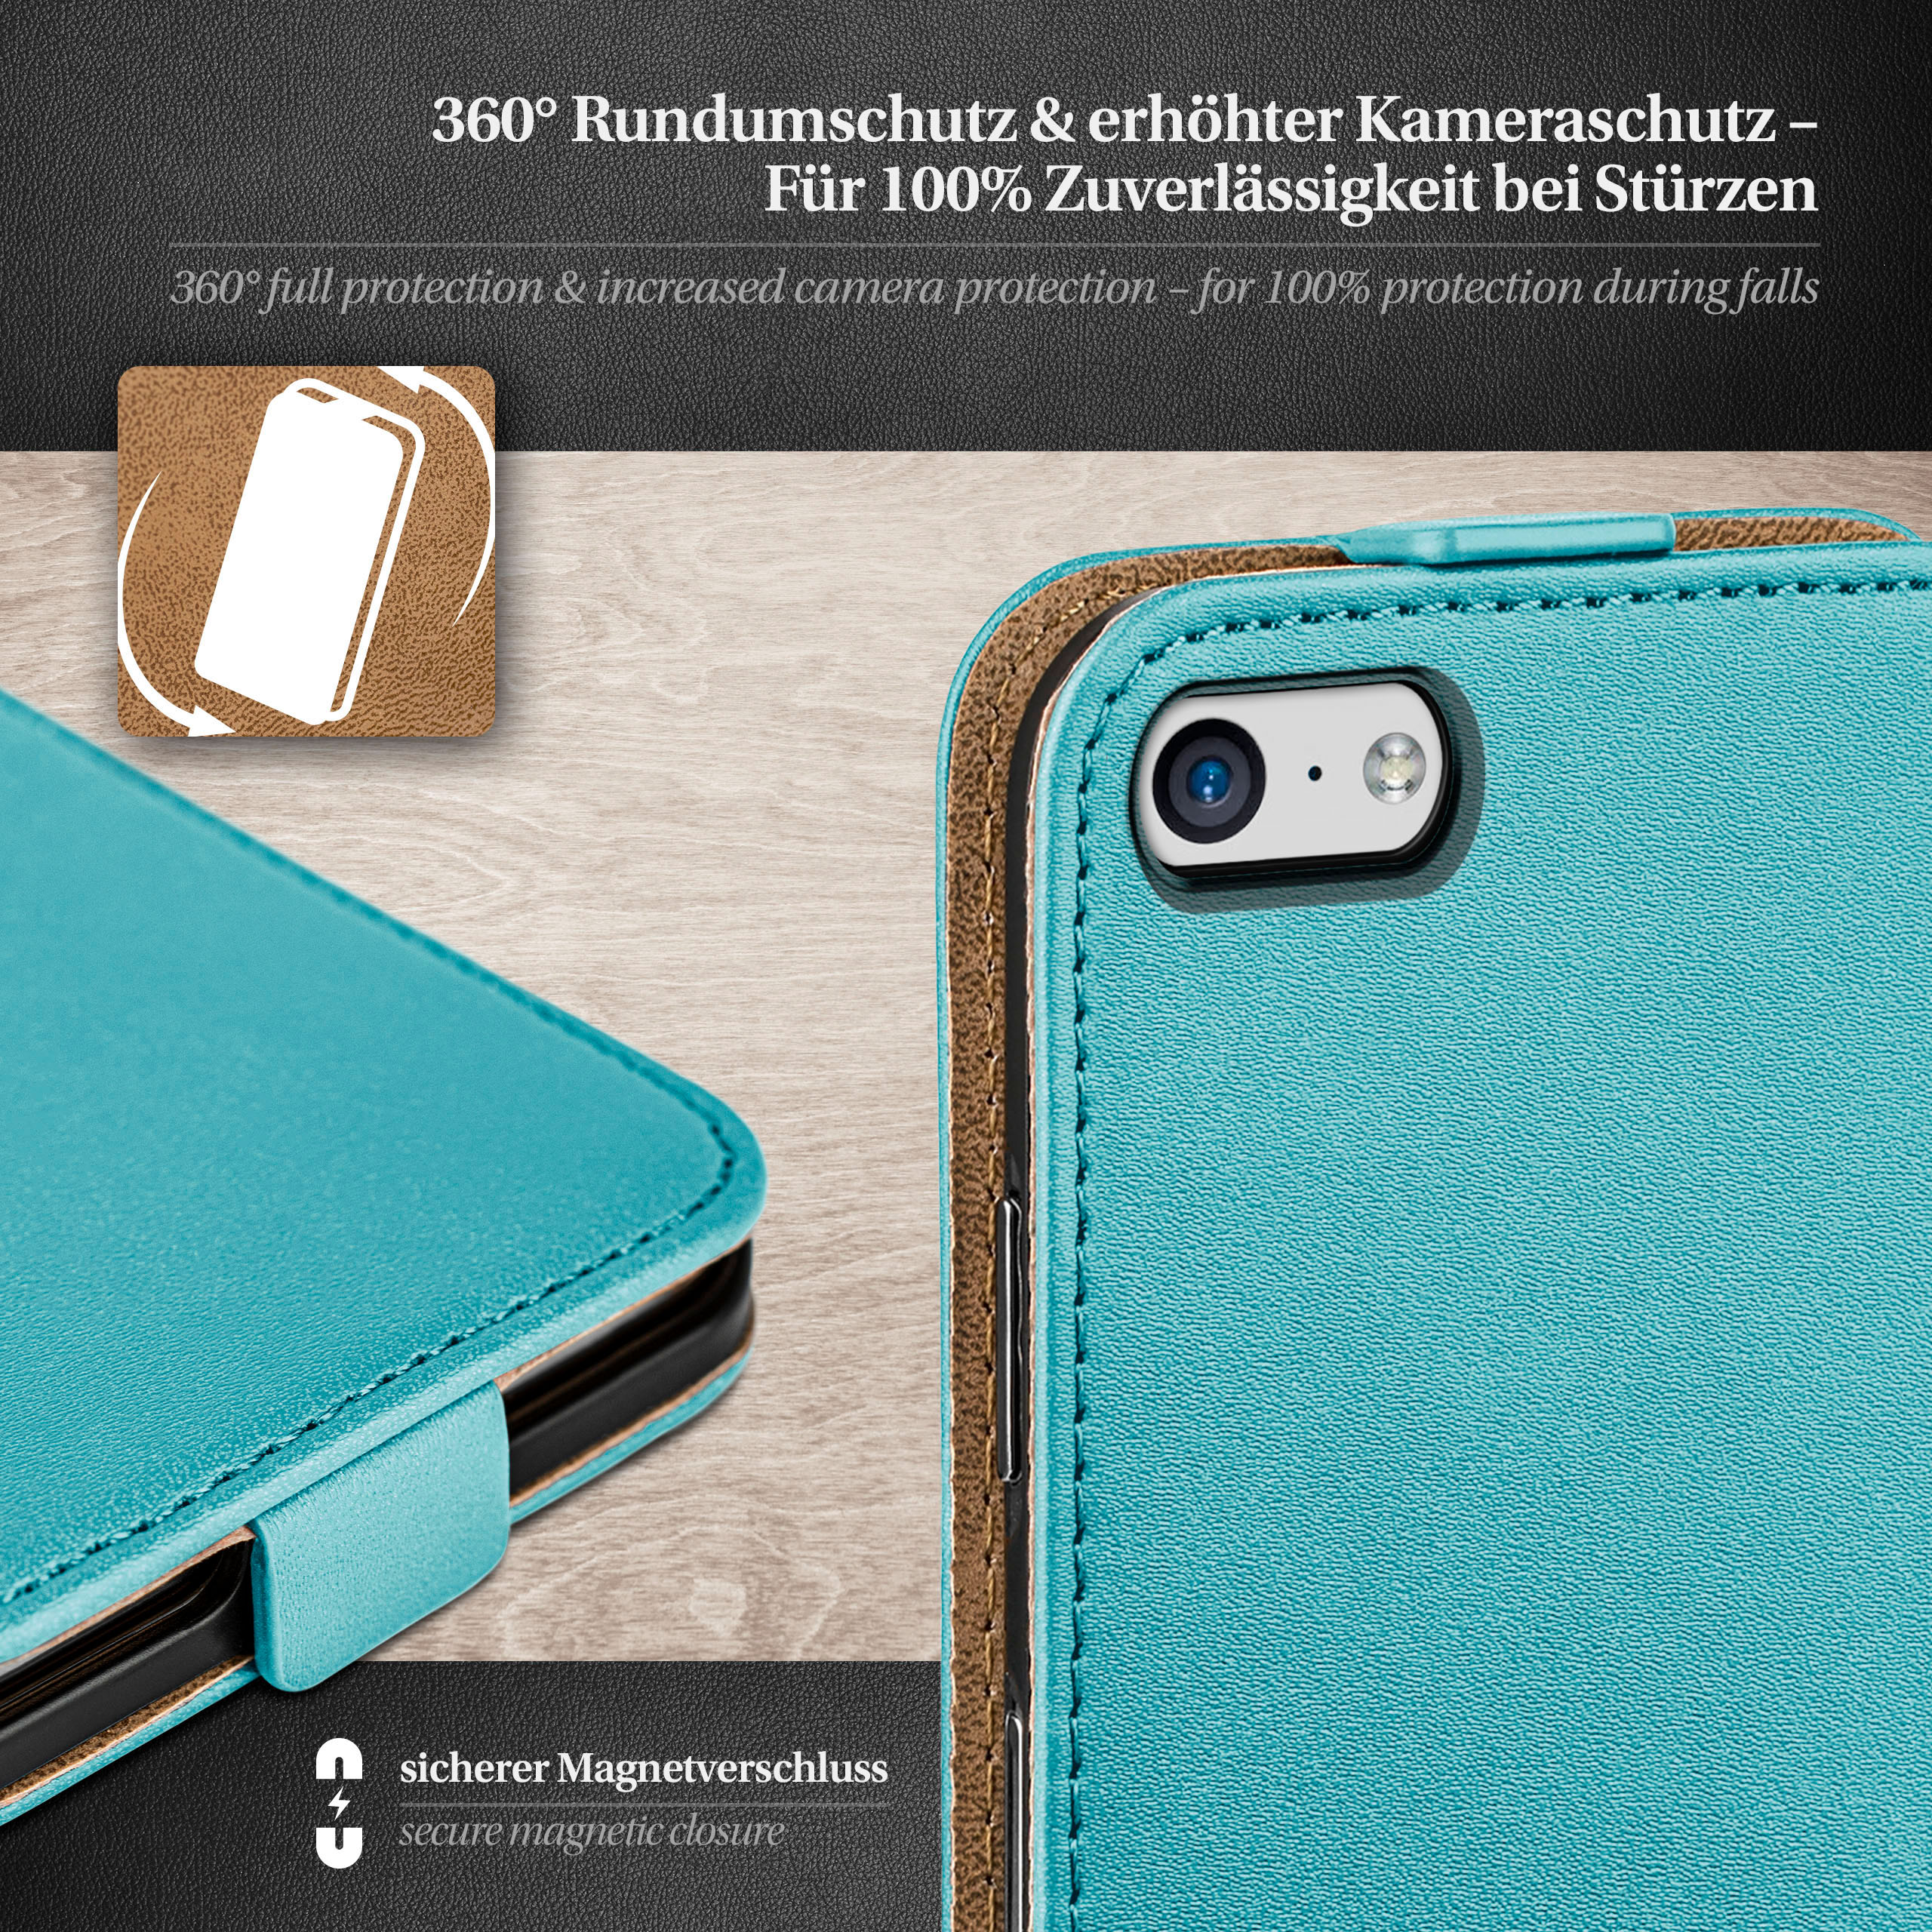 MOEX Cover, Flip Flip 5c, Aqua-Cyan Case, iPhone Apple,